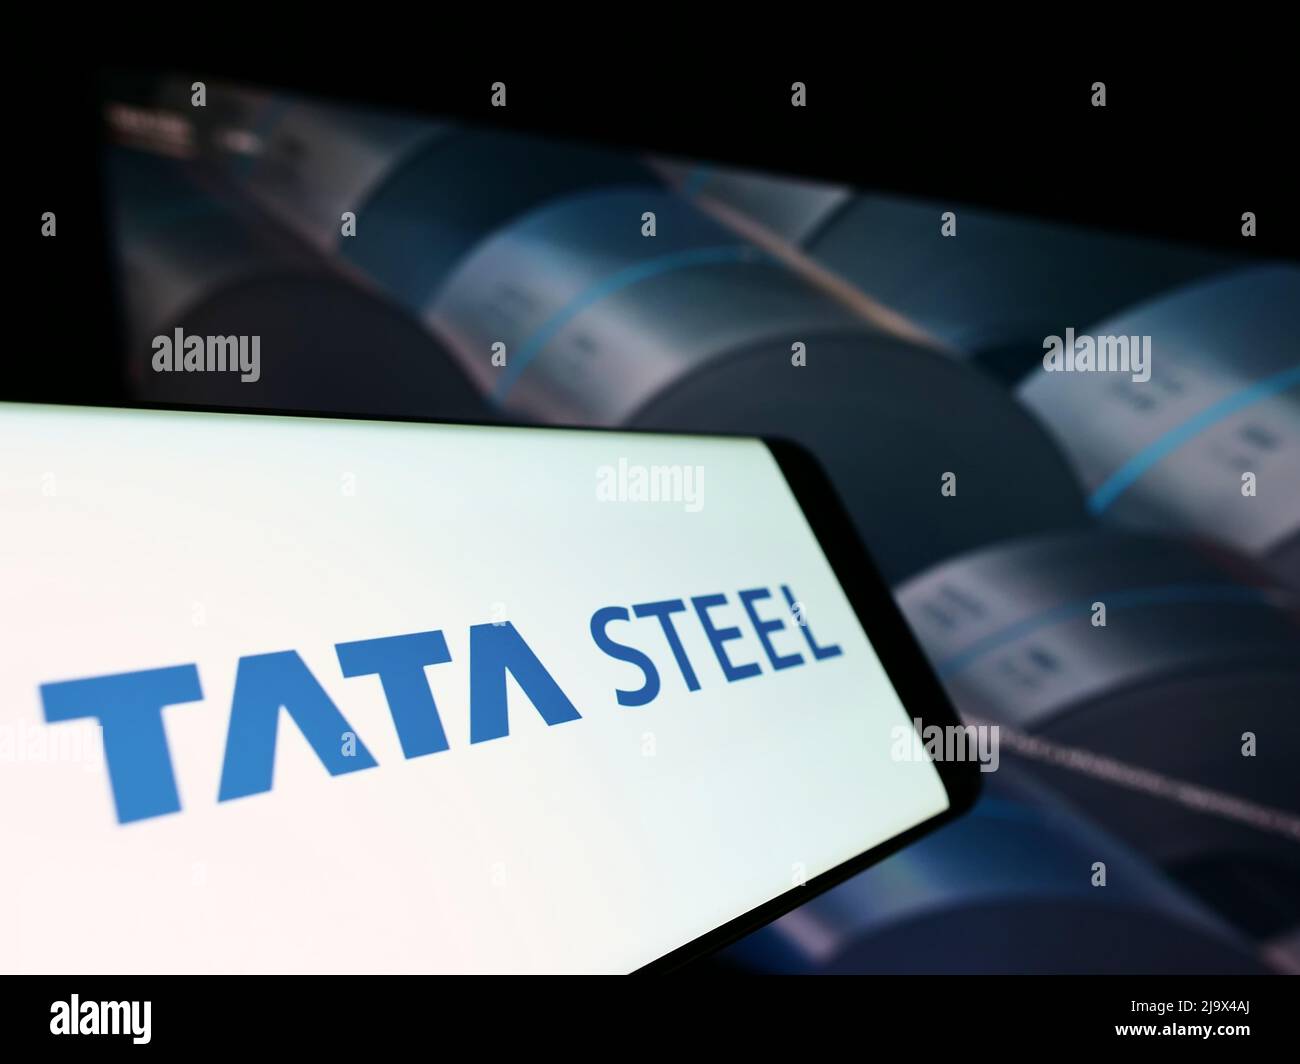 tata-steel-logo (1) –